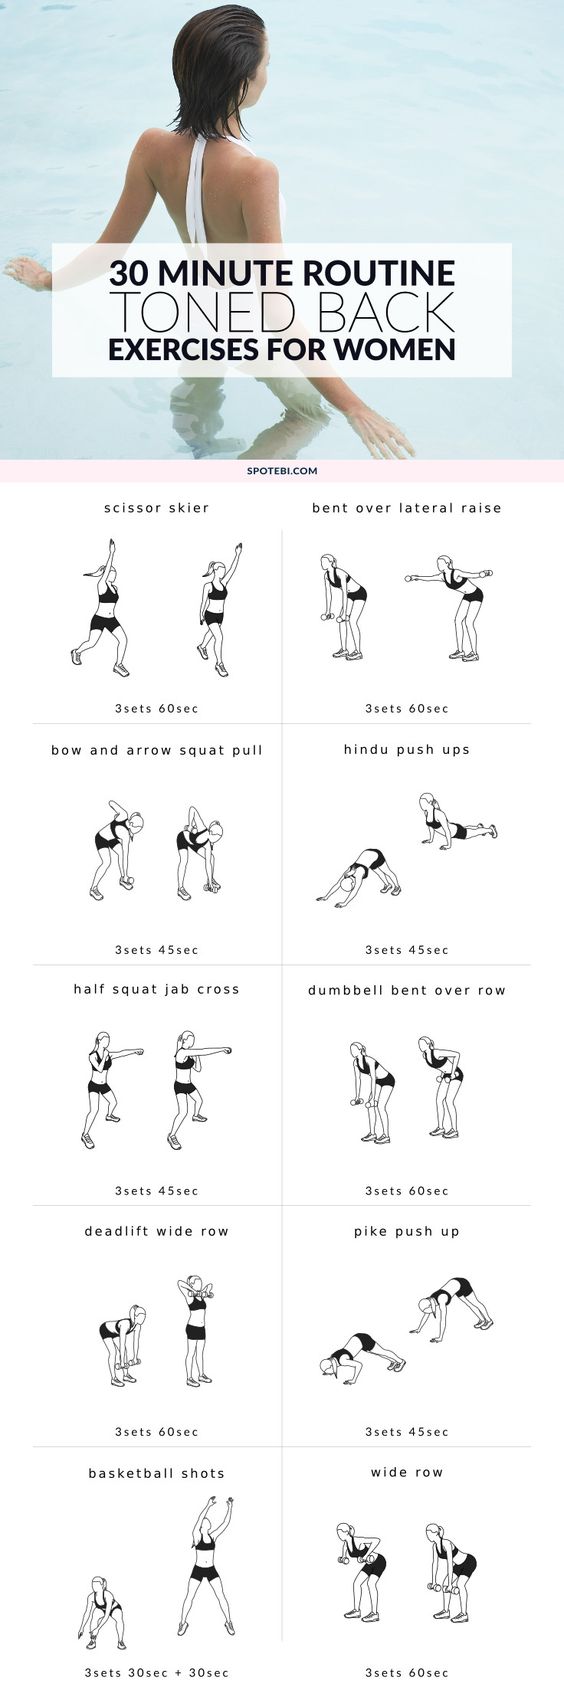 Back Exercises Gym Chart